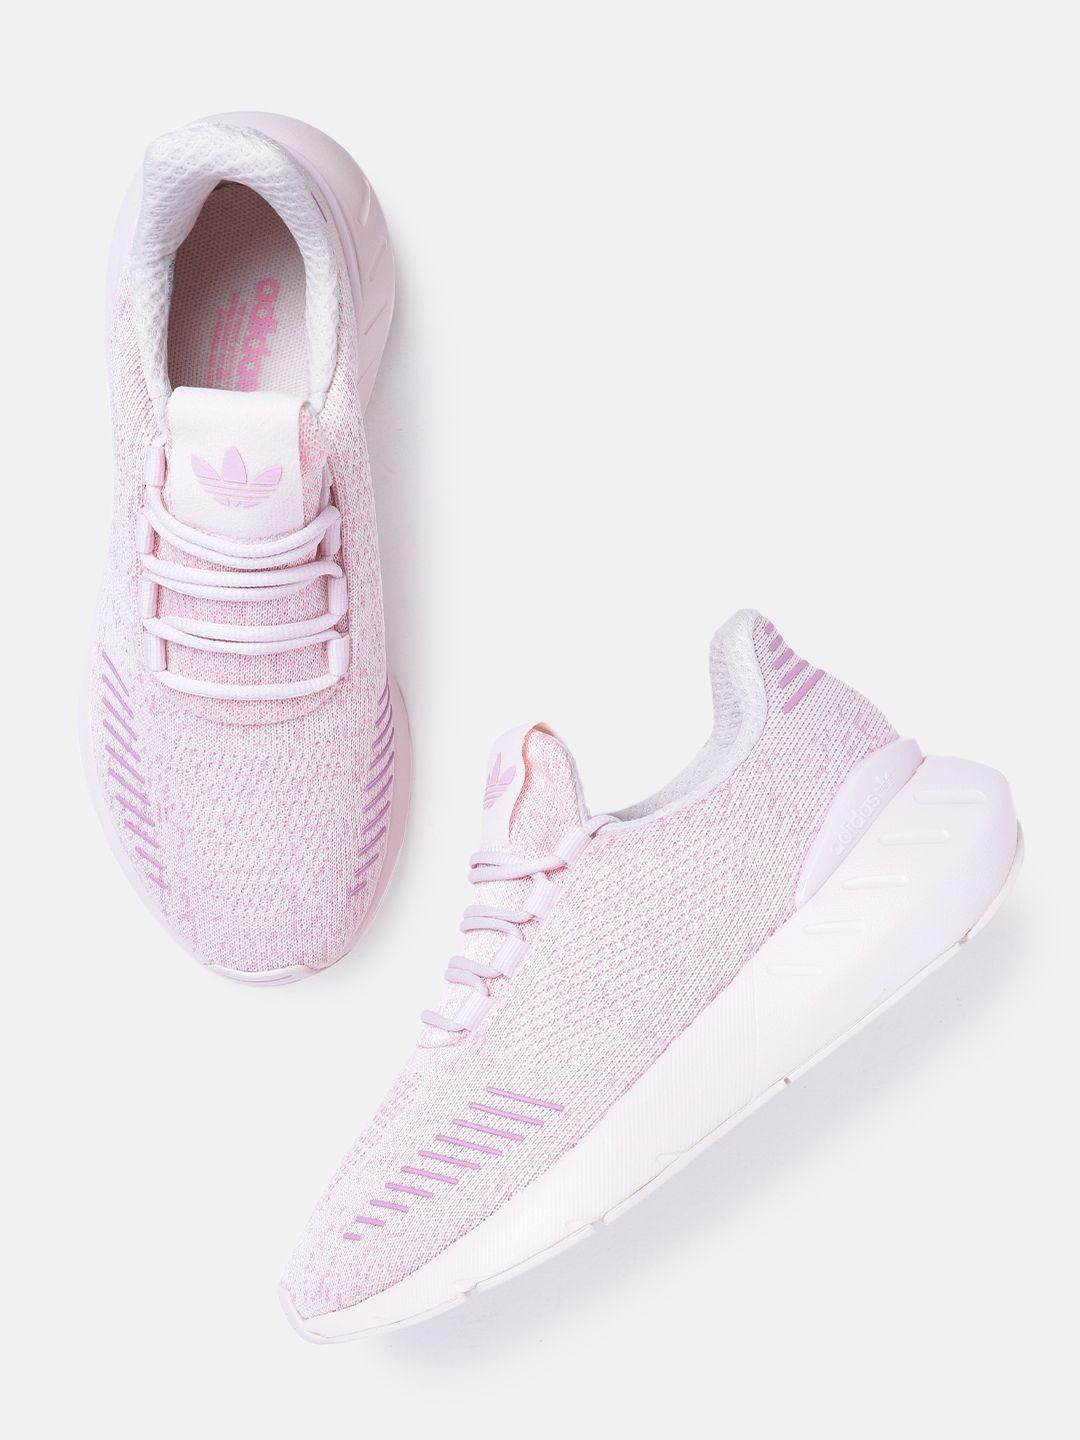 adidas-originals-women-pink-woven-design-swift-run-22-decon-sneakers